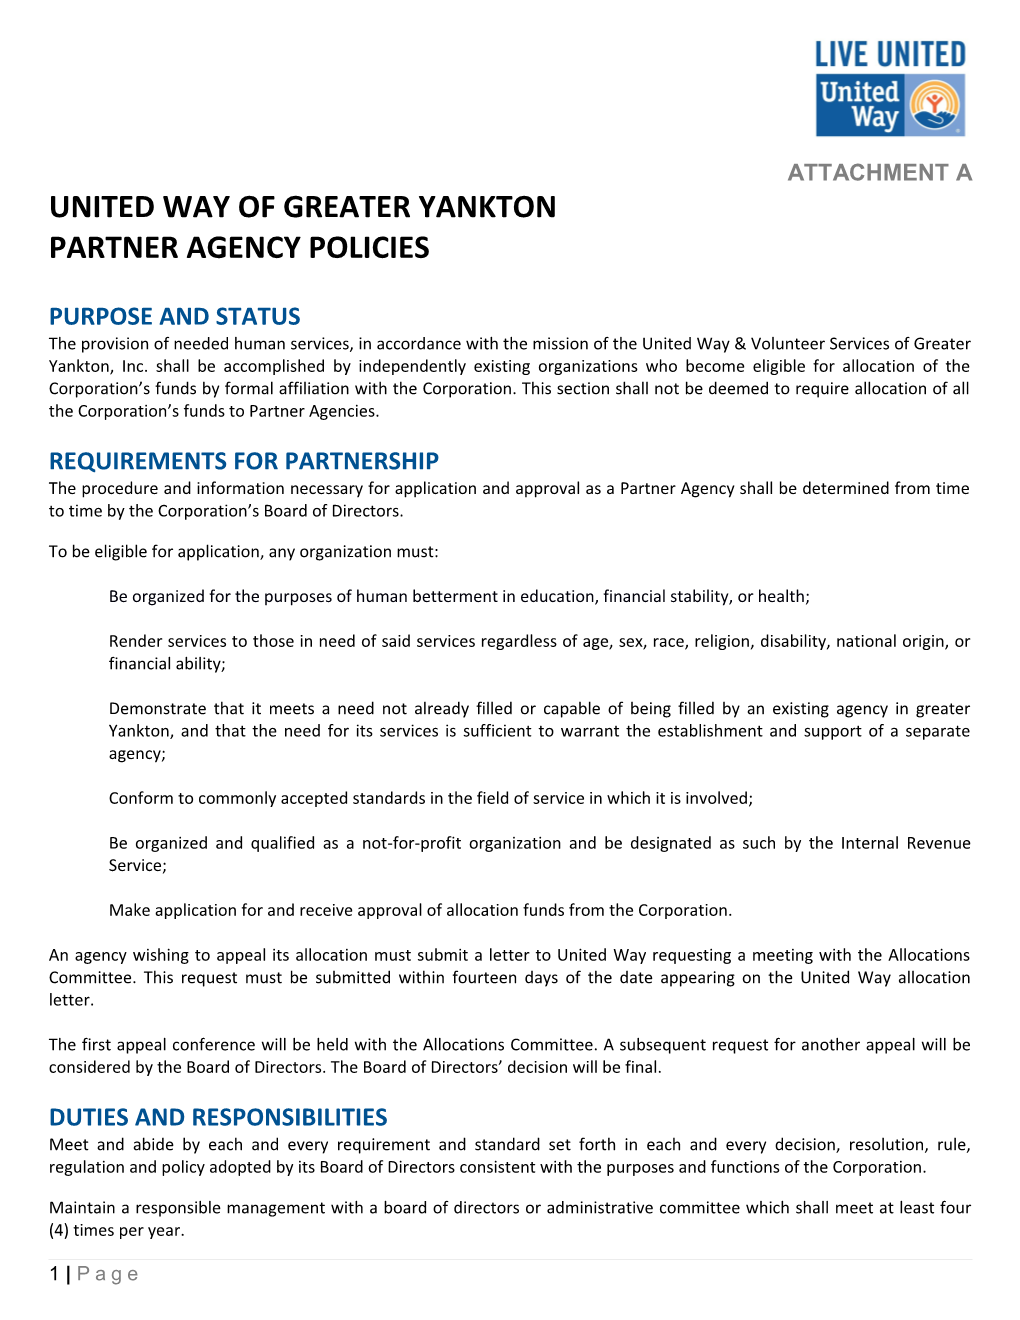 United Way of Greater Yankton